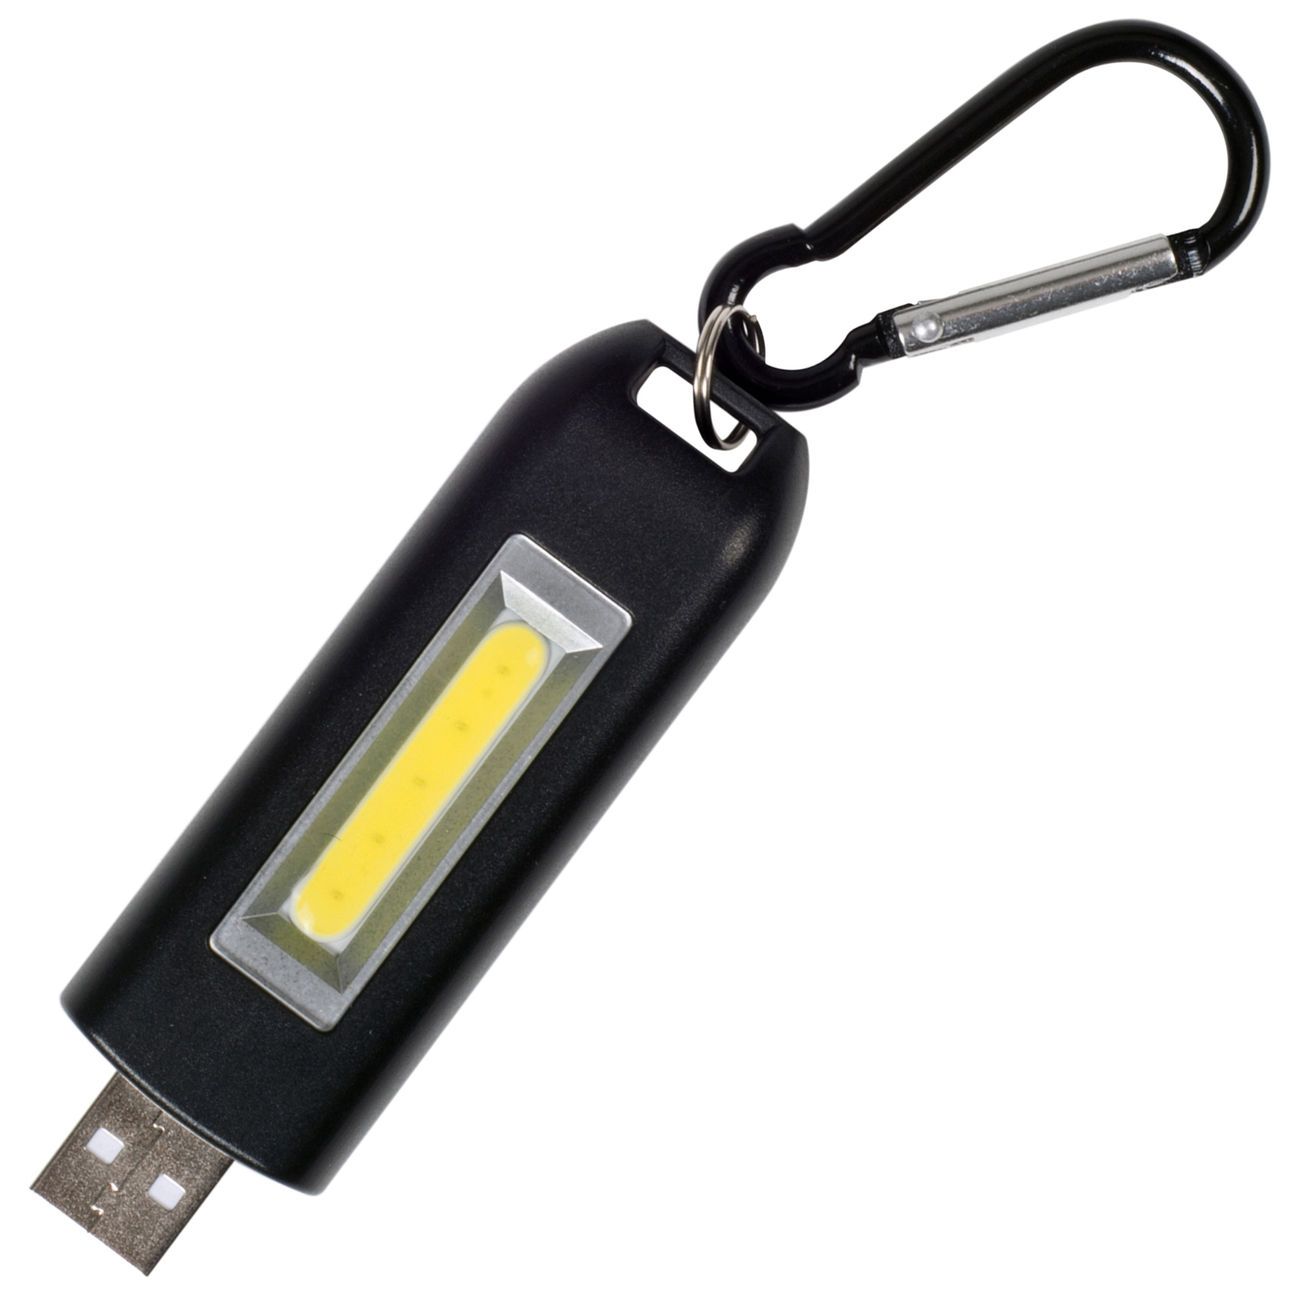 Relags LED Lampe USB 80 Lumen kaufen